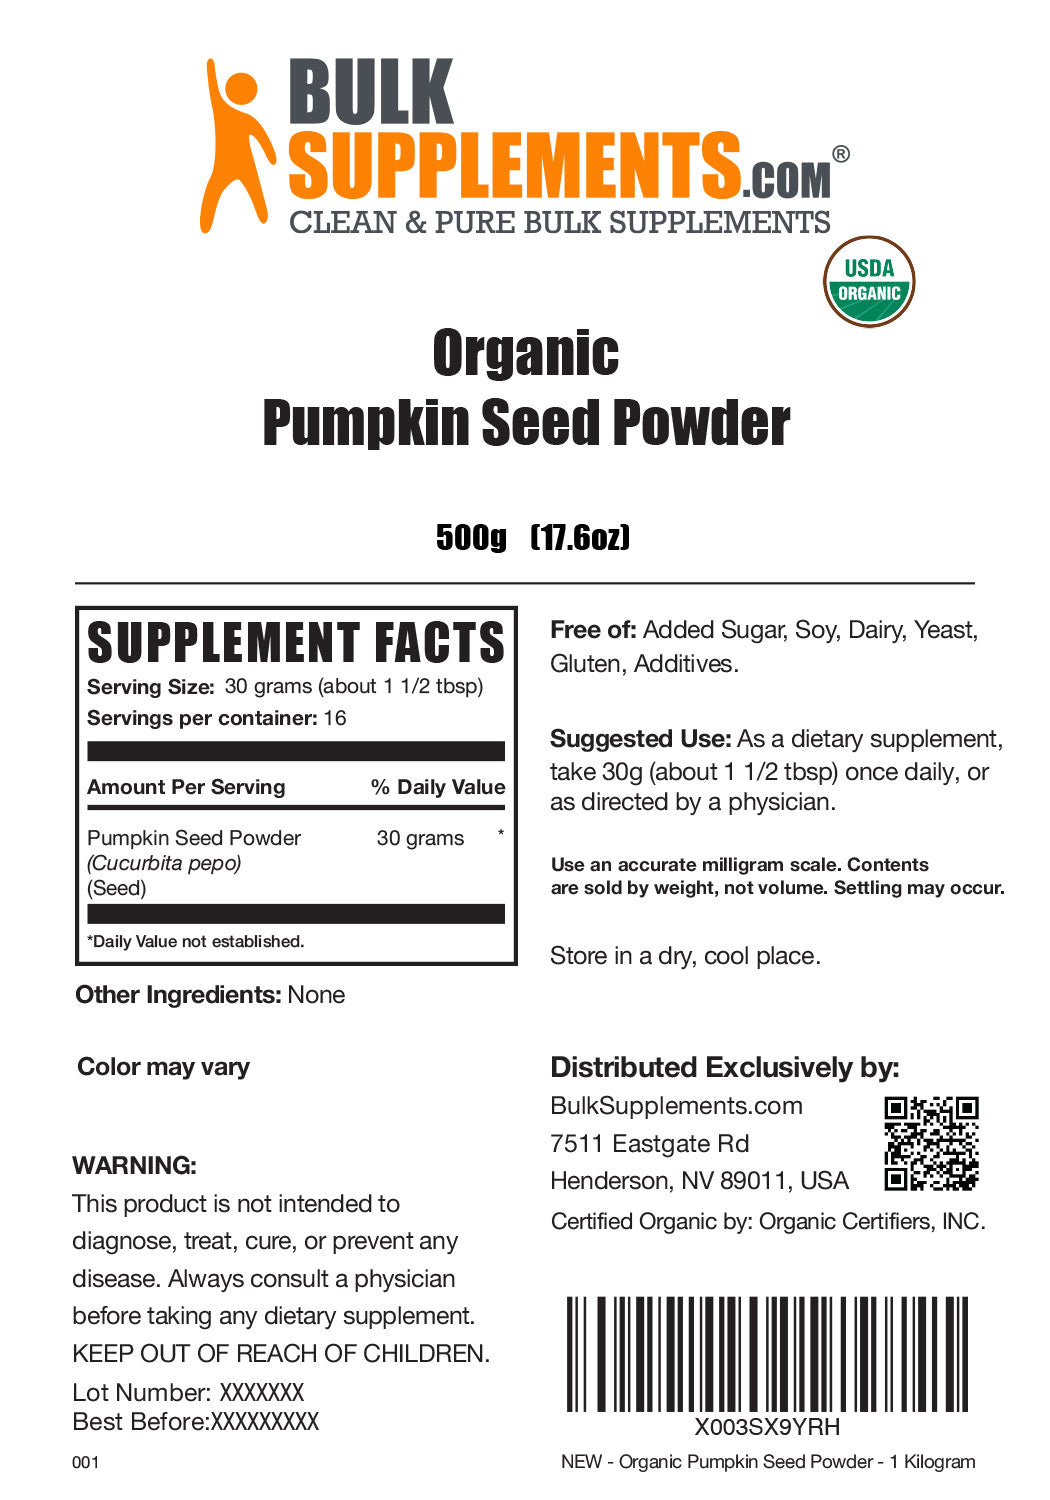 Organic Pumpkin Seed powder label 500g